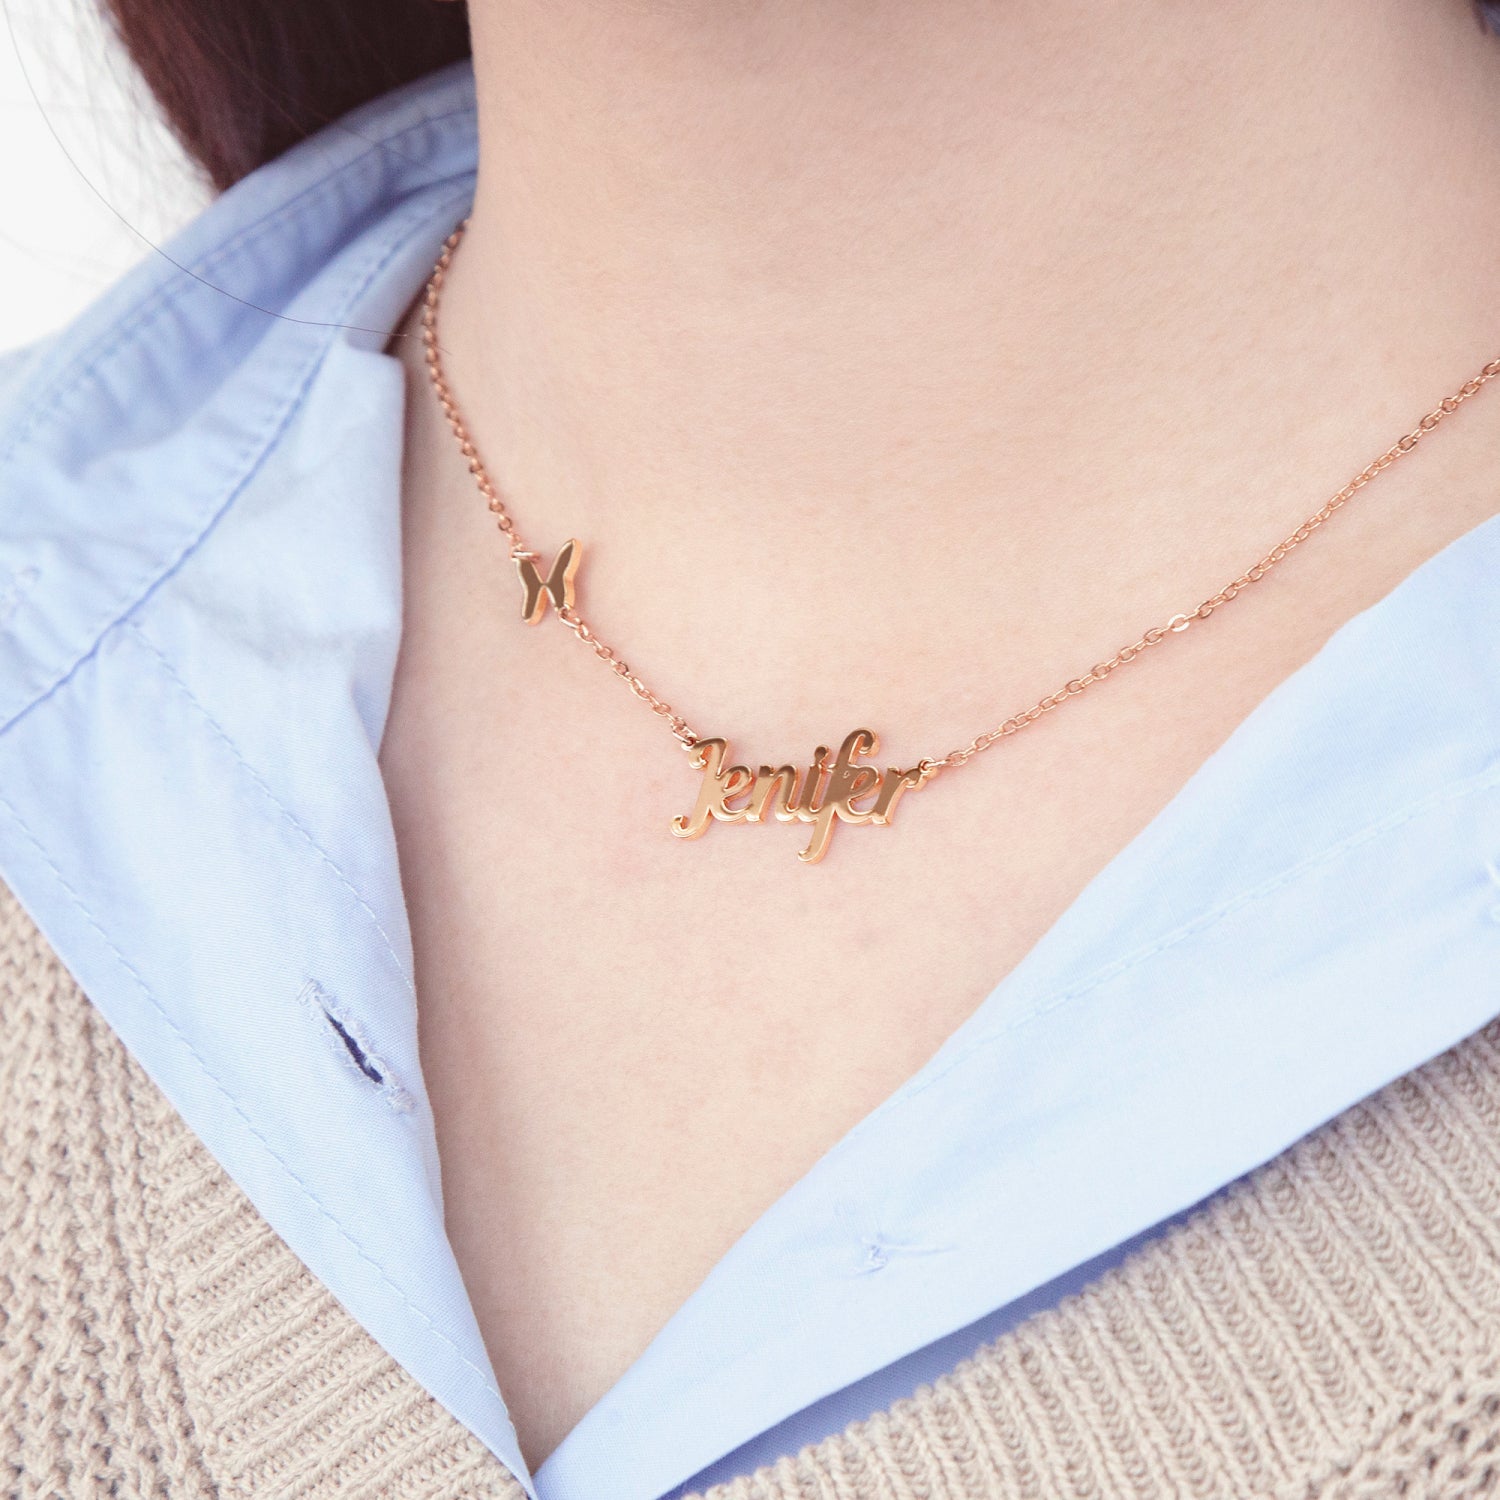 597. Dainty Butterfly Necklace